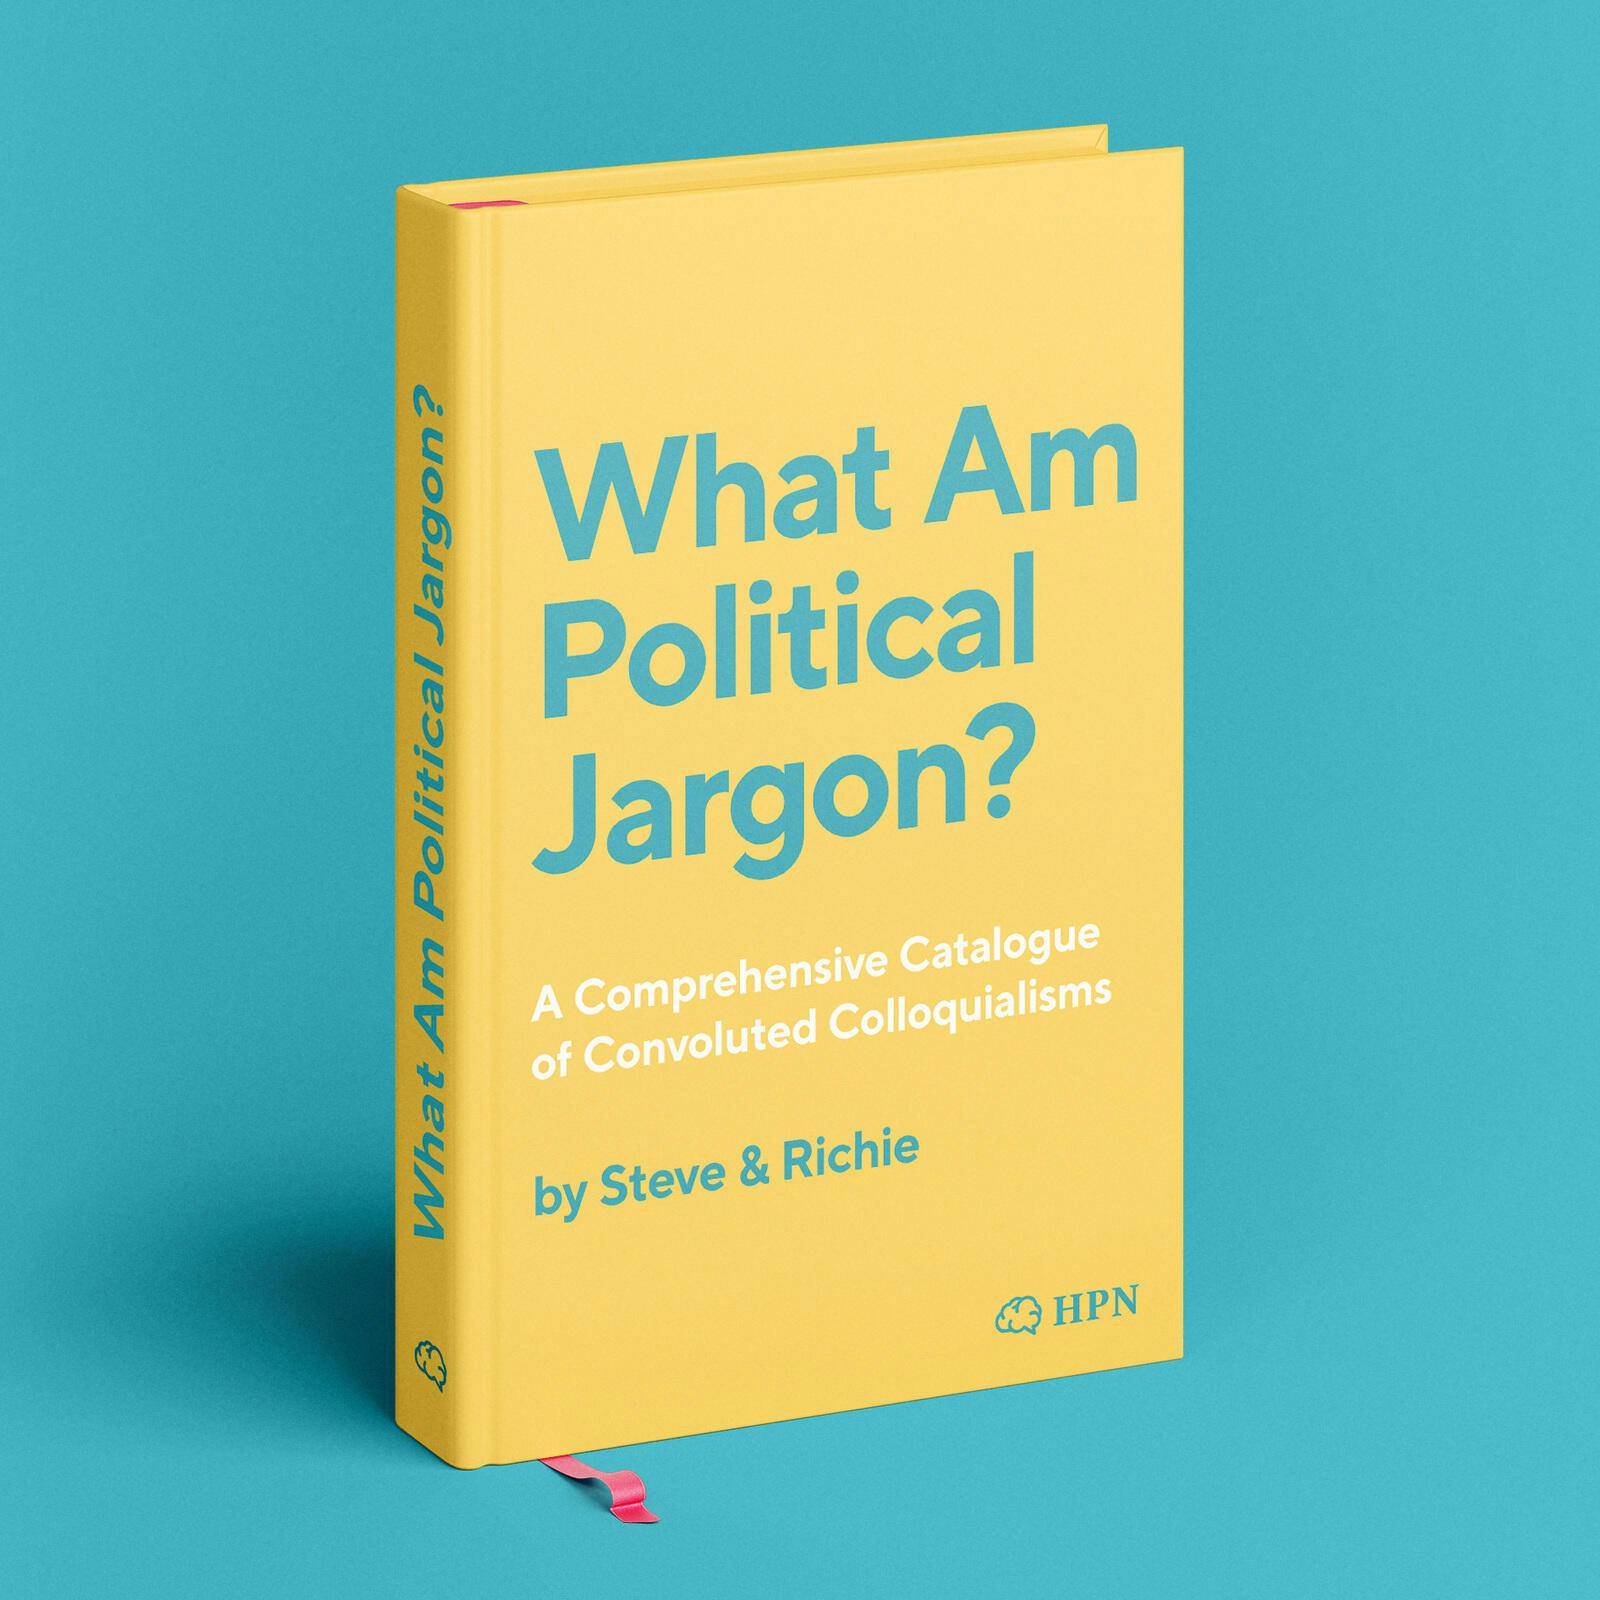 129 - What Am Political Jargon?